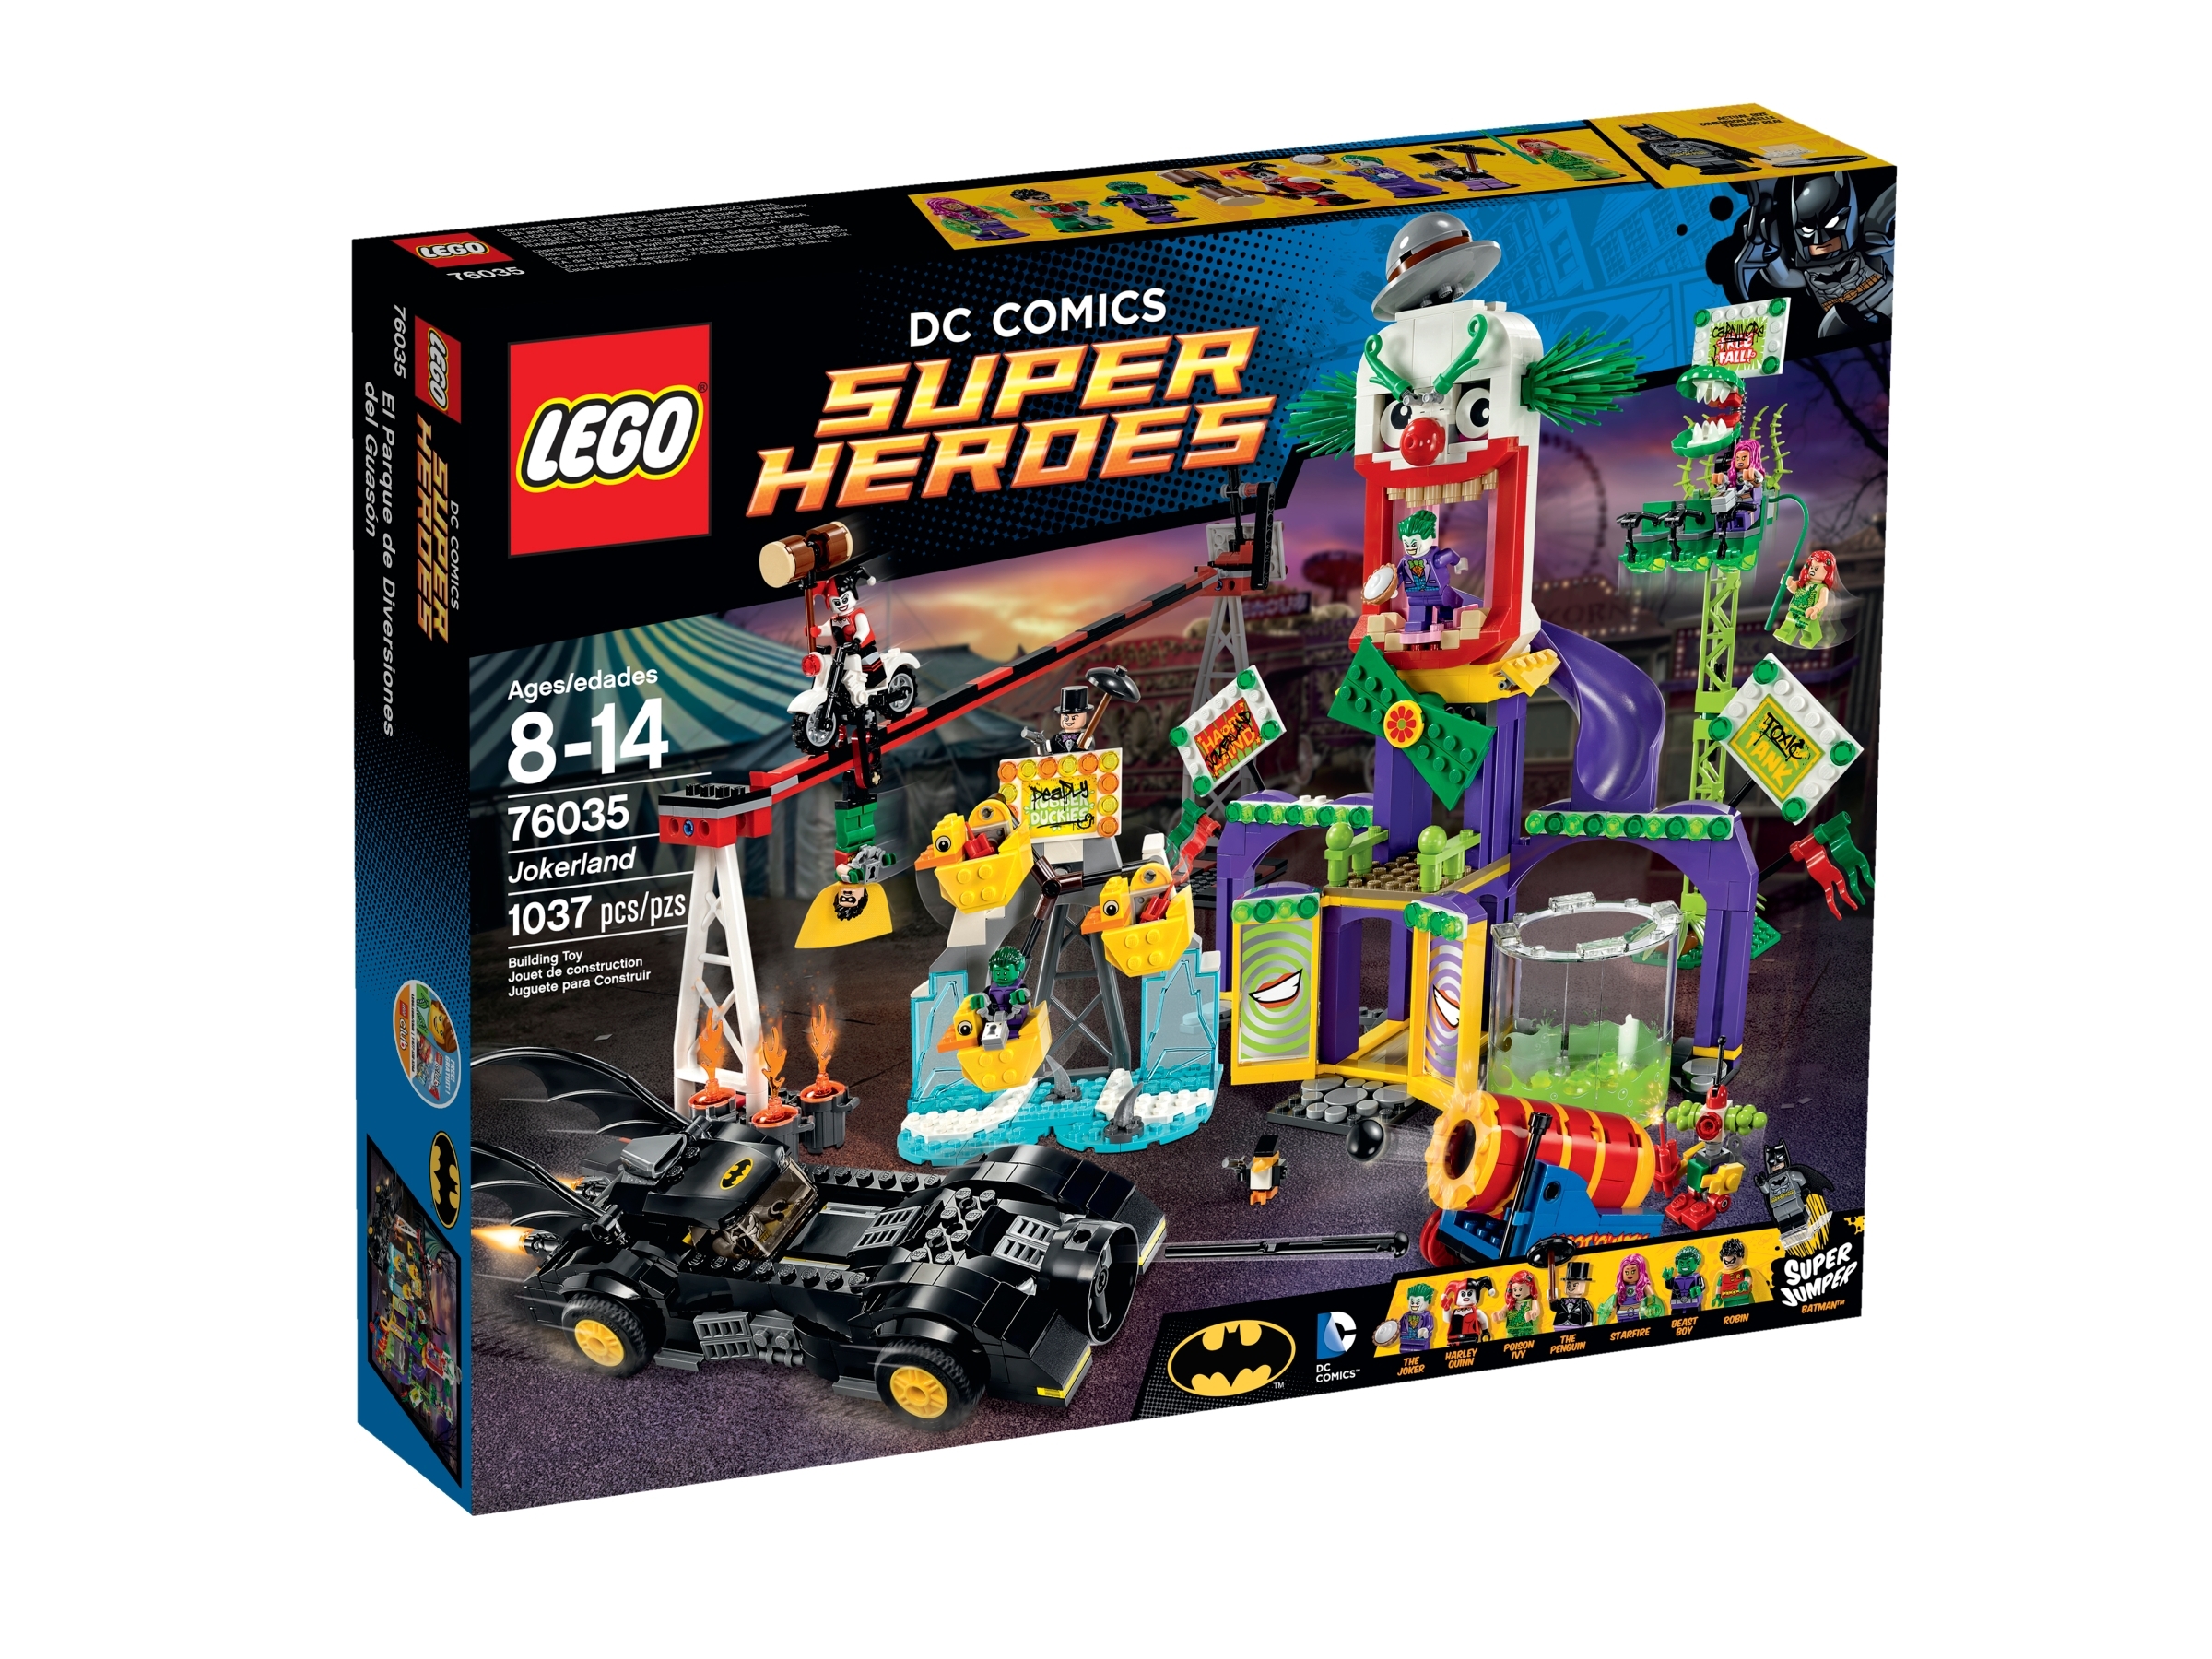 Lego Beast Boy 76035 Joker land Batman II Super Heroes Minifigure 100% Authentic 